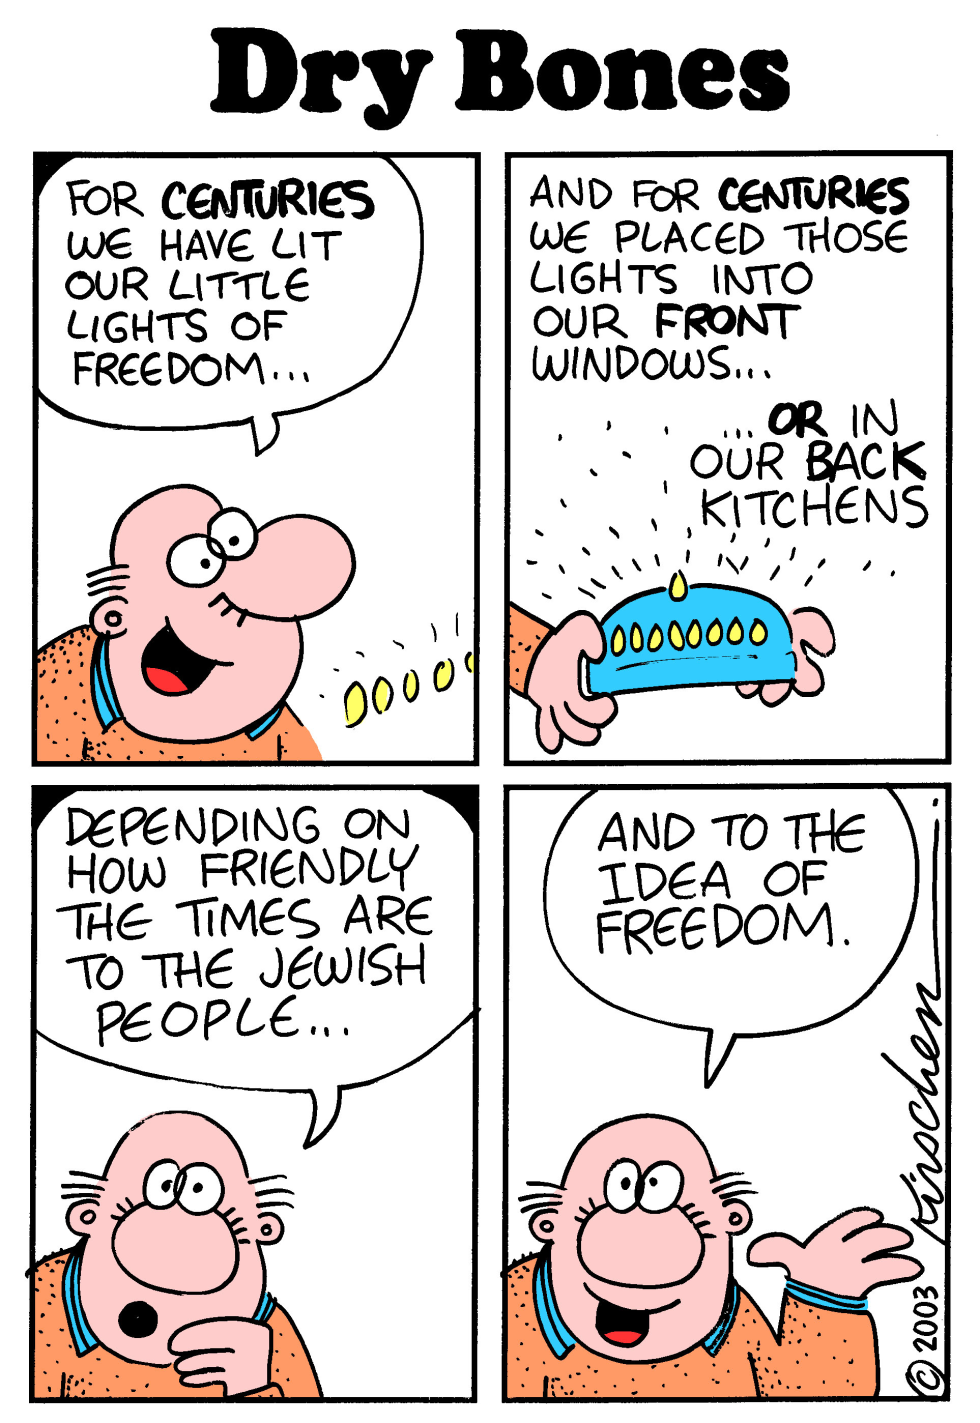  THE IDEA OF FREEDOM by Yaakov Kirschen